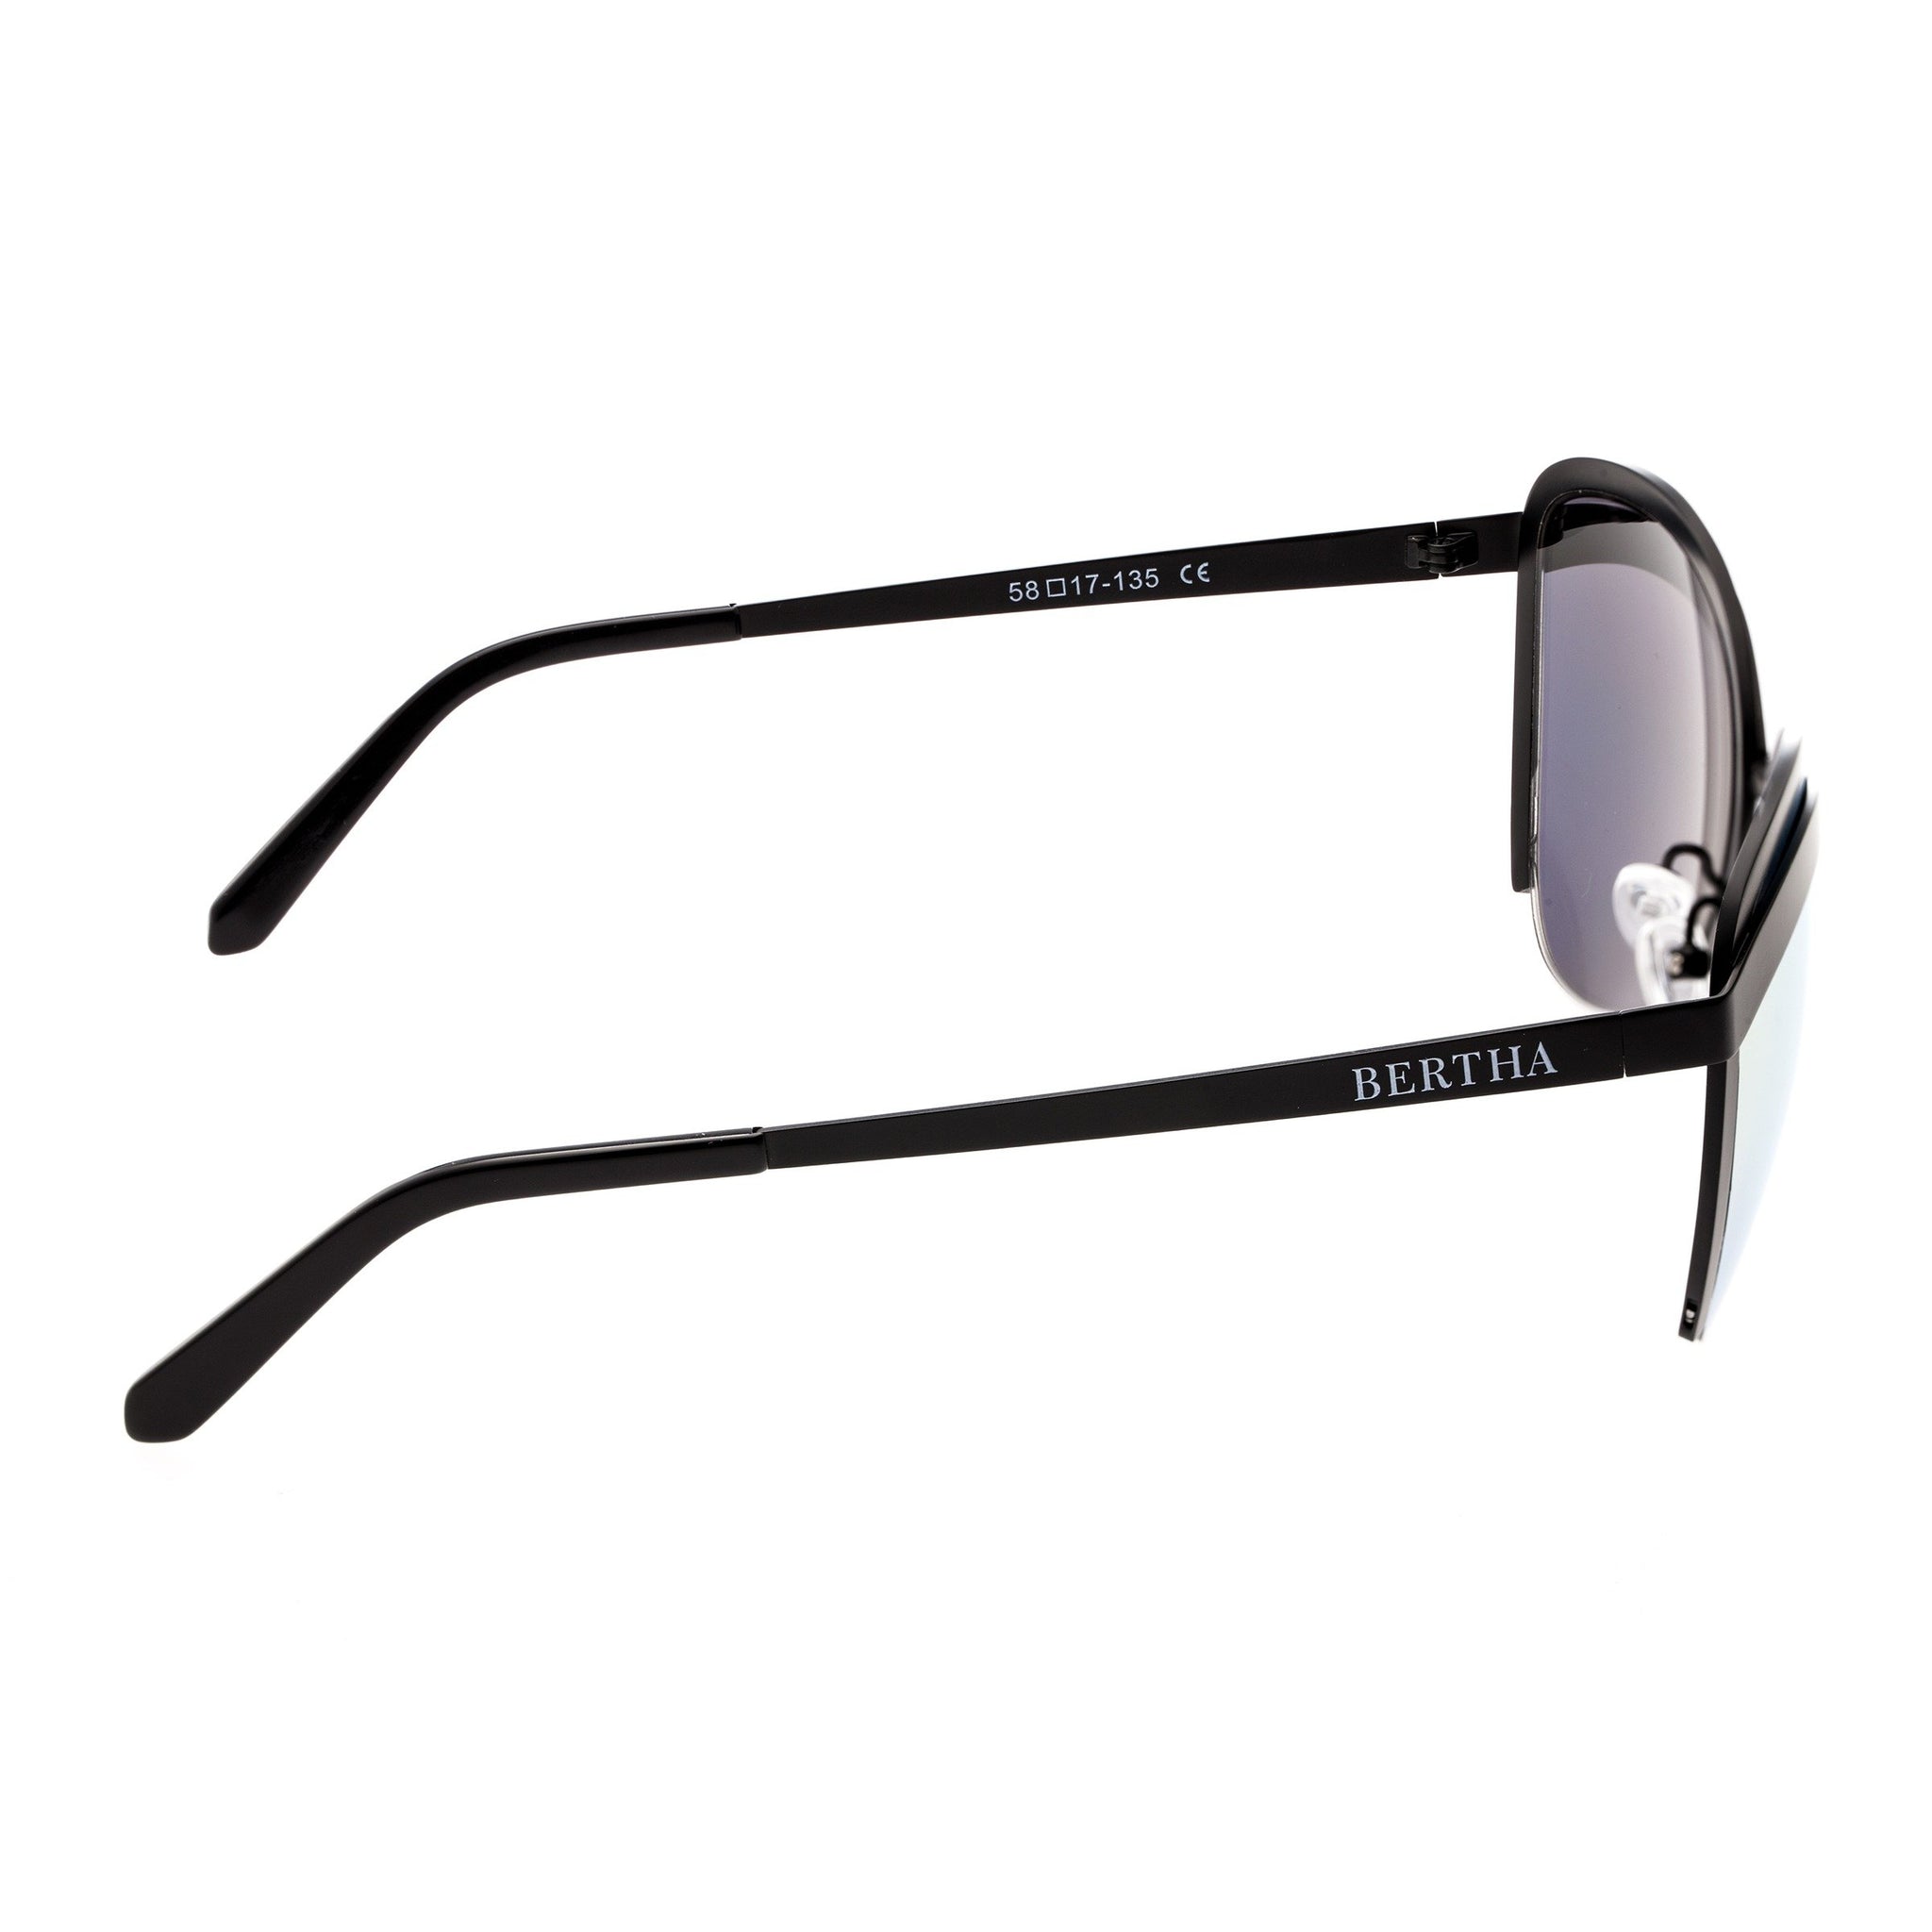 Bertha Aubree Polarized Sunglasses - Black/Yellow - BRSBR017B